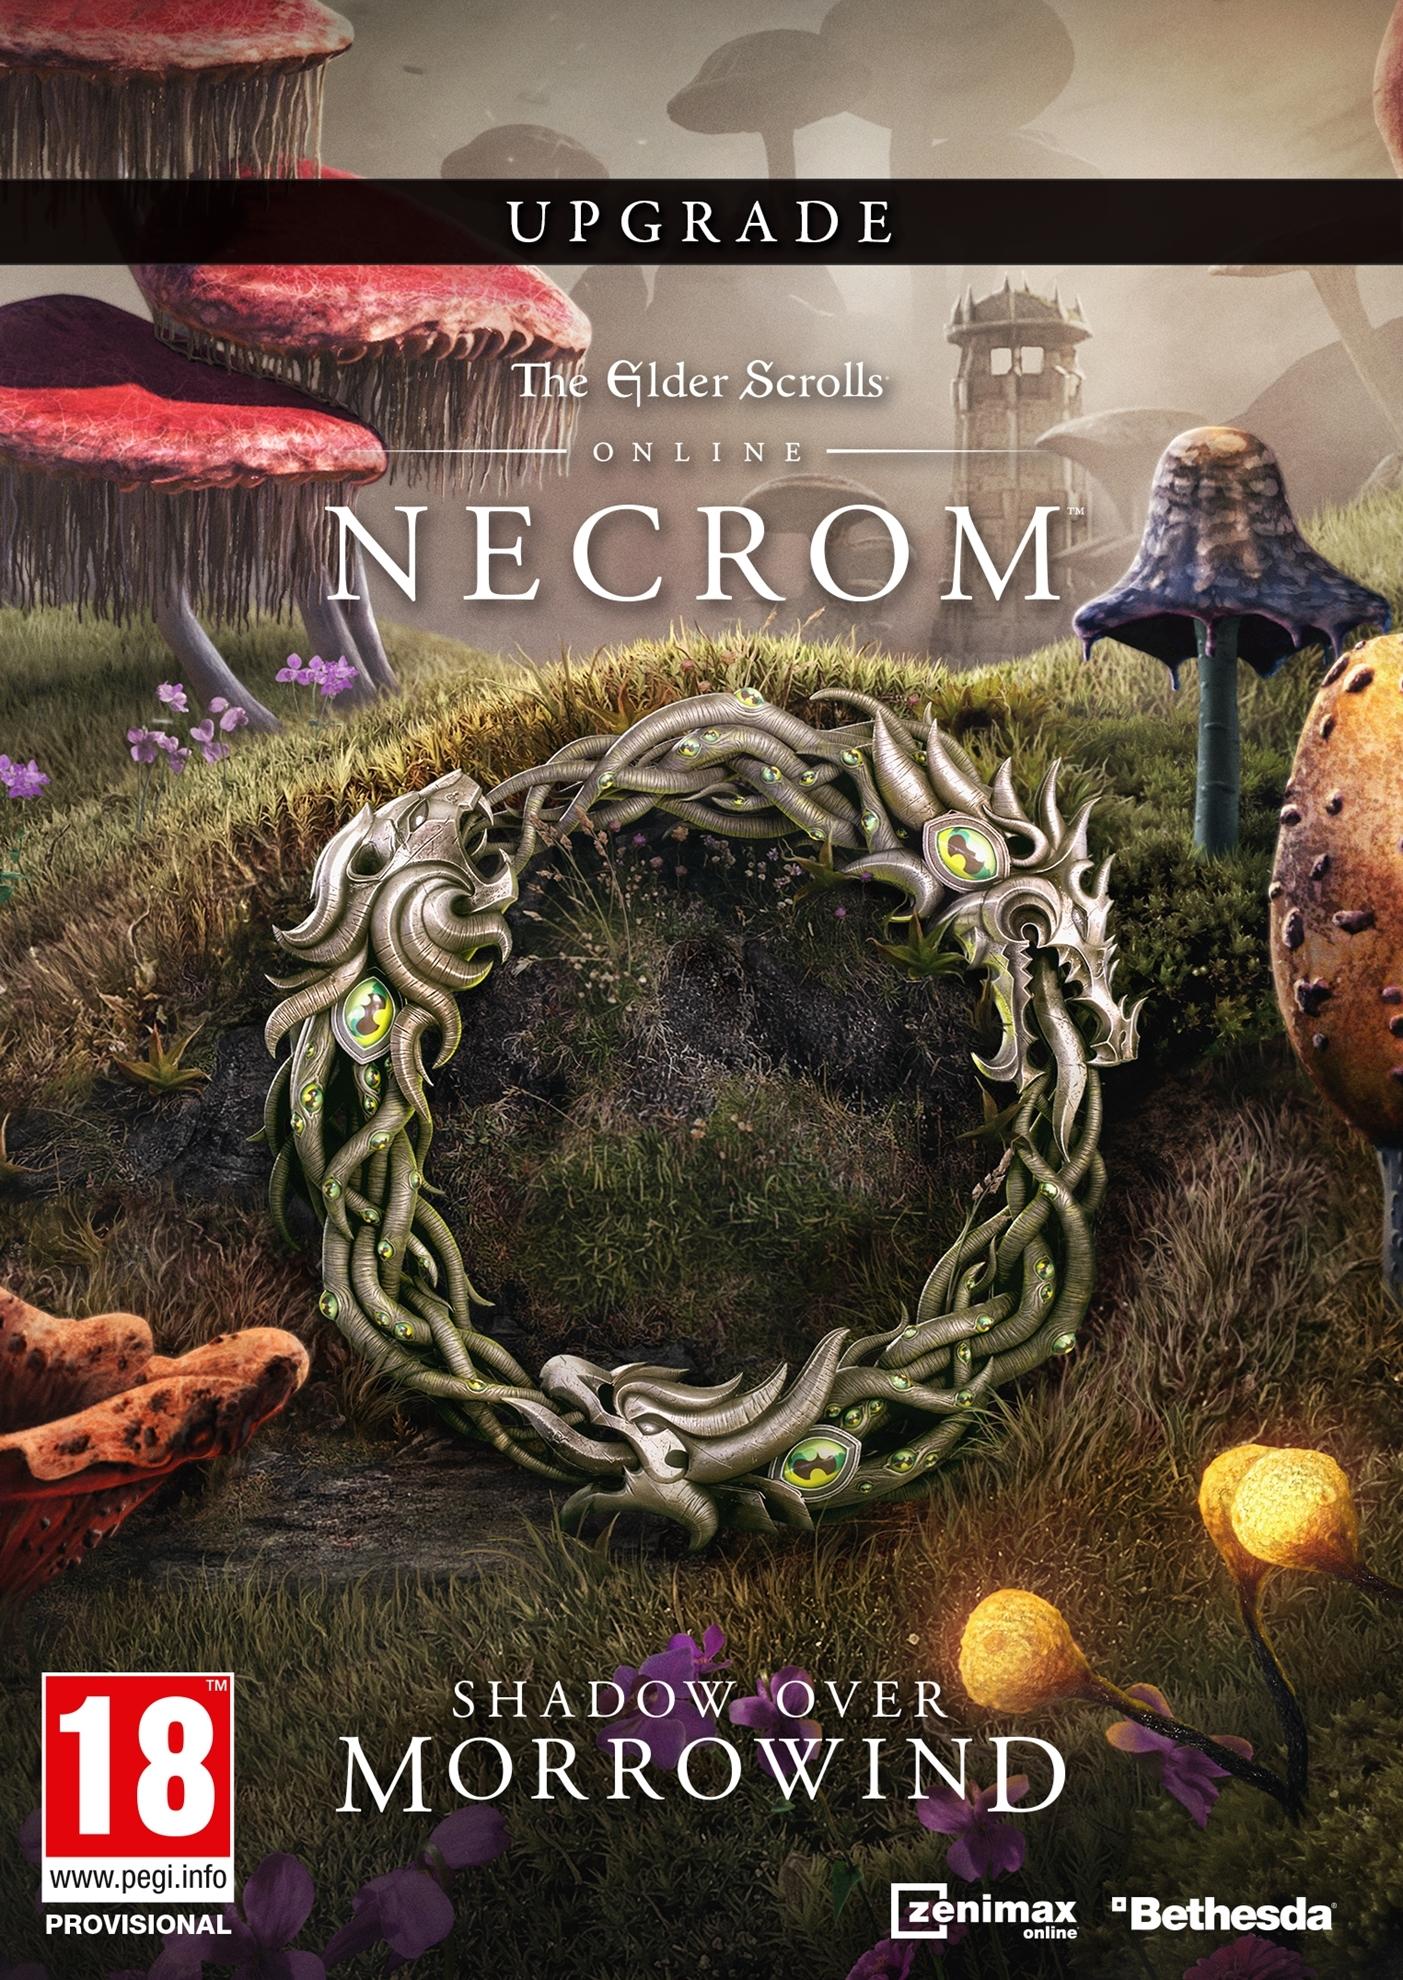 The Elder Scrolls Online Upgrade: Necrom Limited Time Offer Pre Order (Steam) | ROW 4 (7871de44-d11e-41a4-8d8f-dd111dc0c1c5)